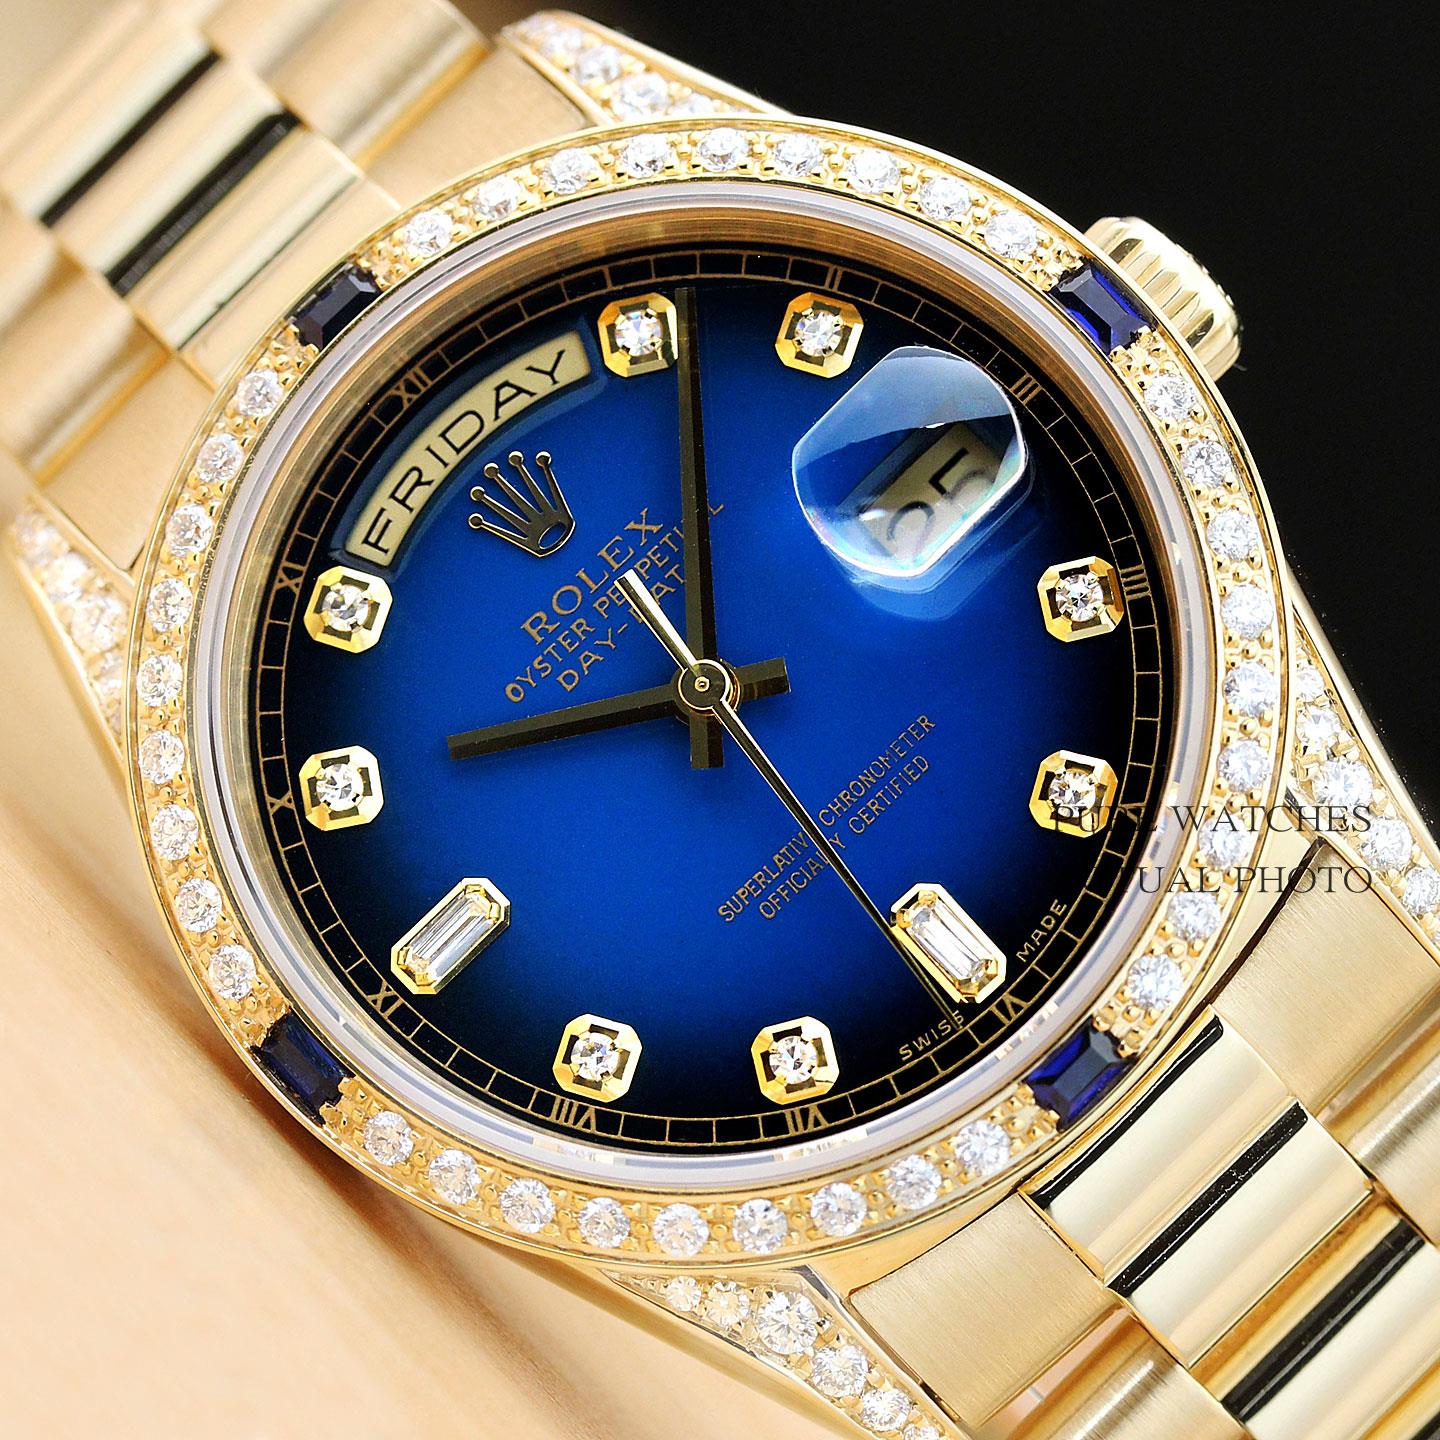 MENS ROLEX 18238 DAY-DATE PRESIDENT BLUE SAPPHIRE DIAMOND WATCH | eBay